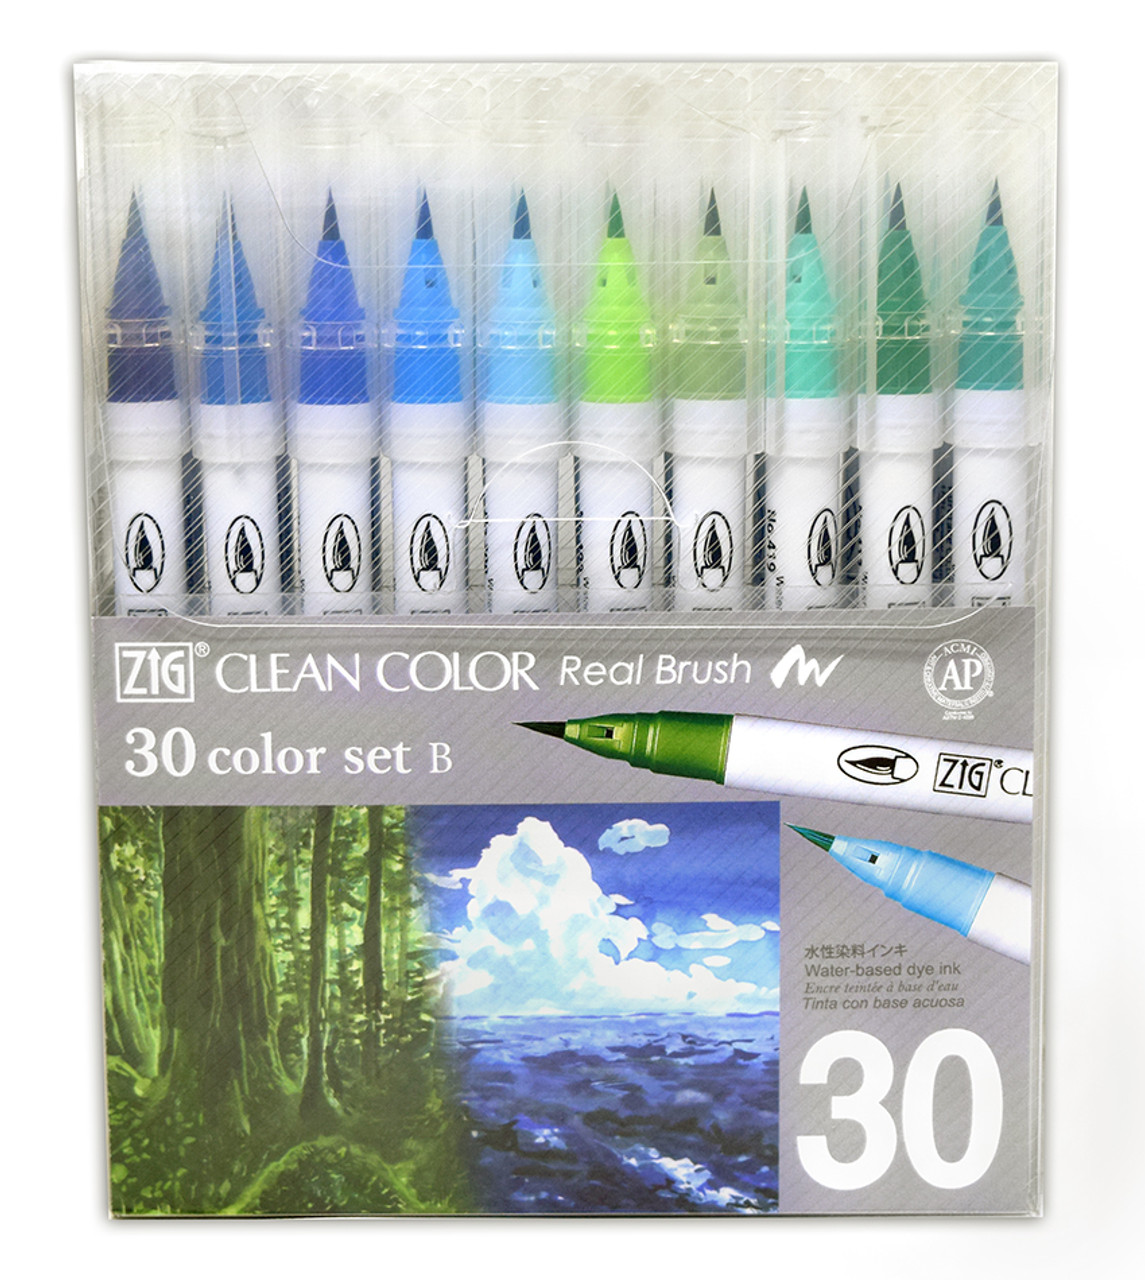 Ecoline Liquid Watercolor Brush Pen Set of 30 Additional Colors